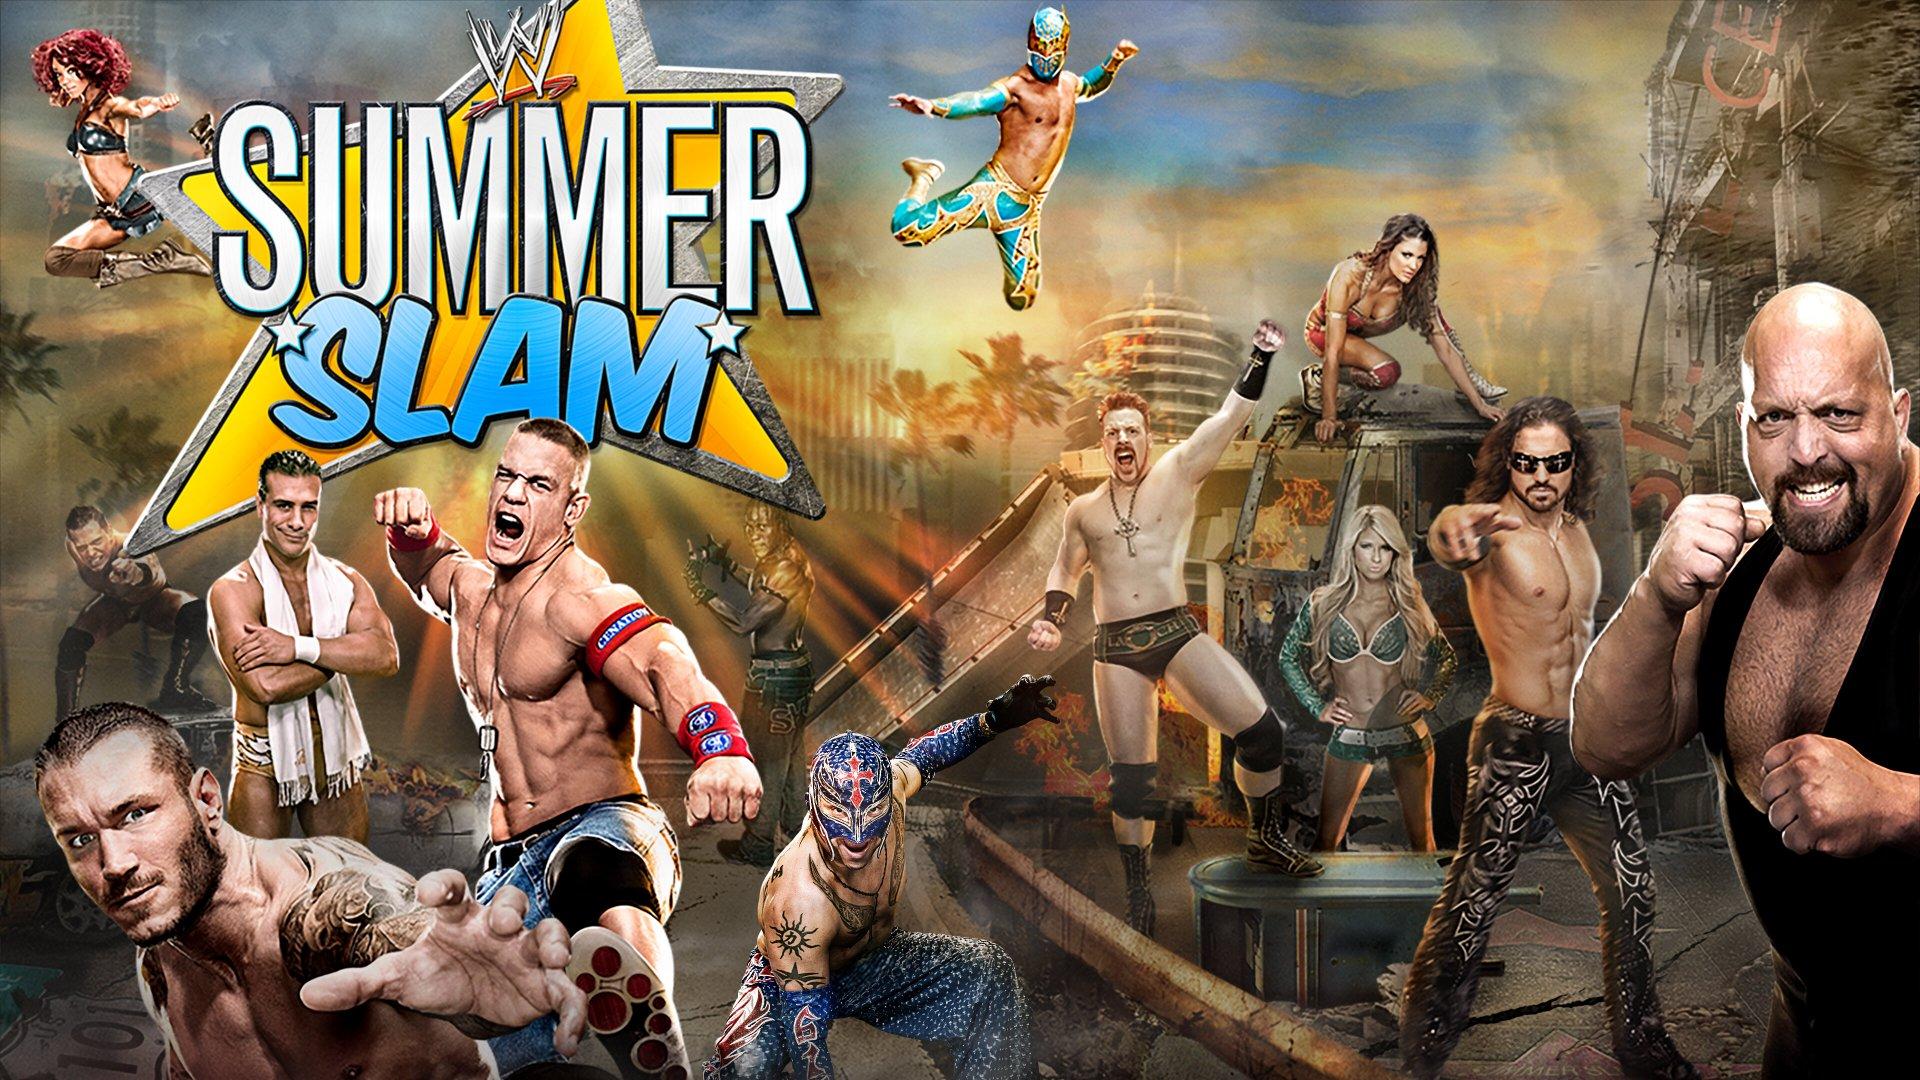 WWE SummerSlam 2011